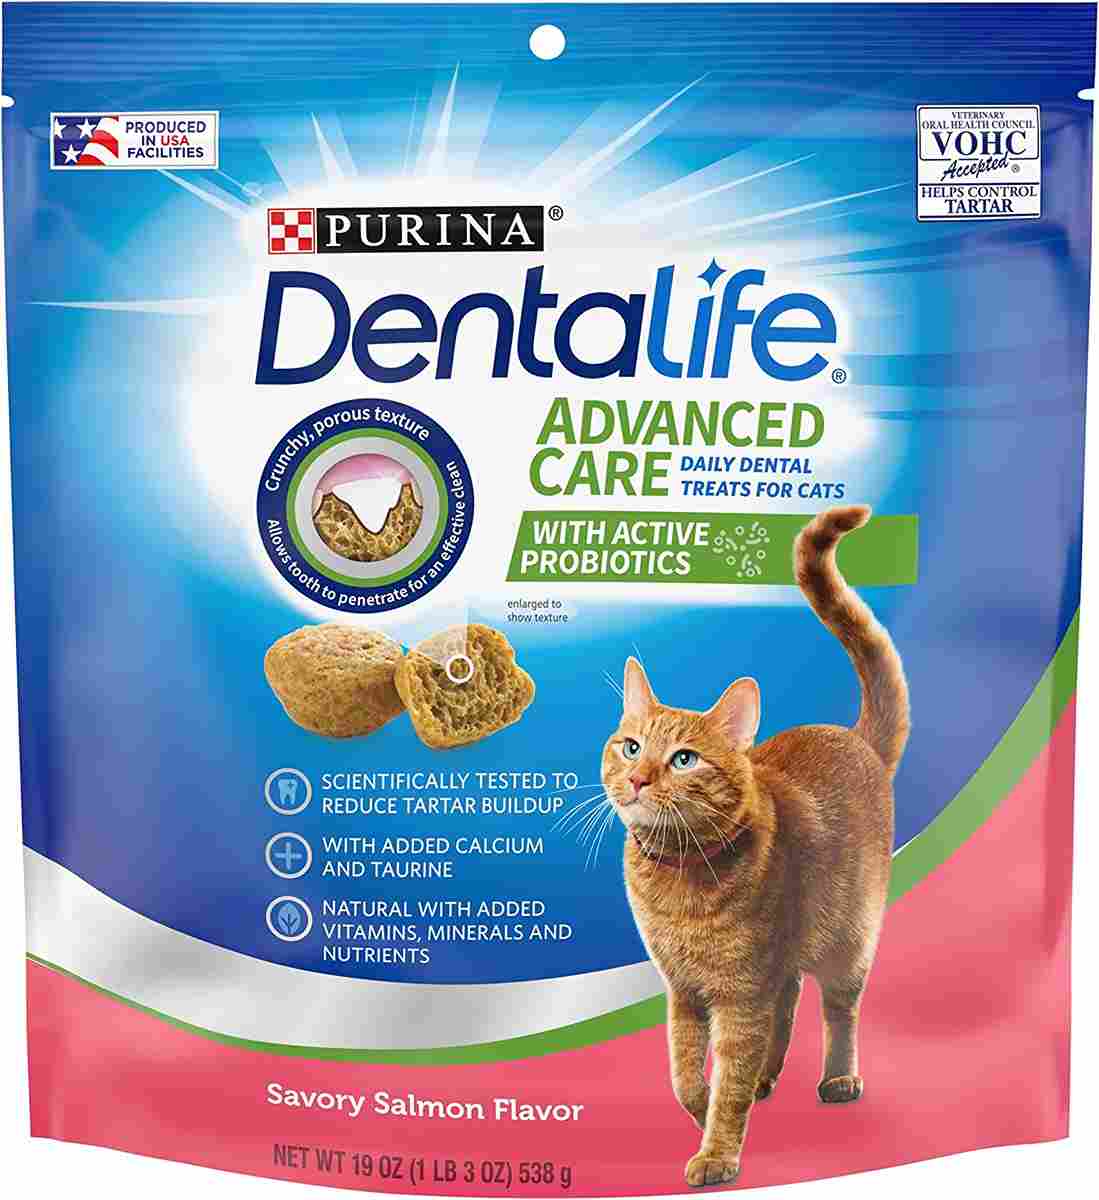 Purina DentaLife Made in USA Facilities Cat Dental Treats, Savory Salmon Flavor - (4) 19 oz. Bags